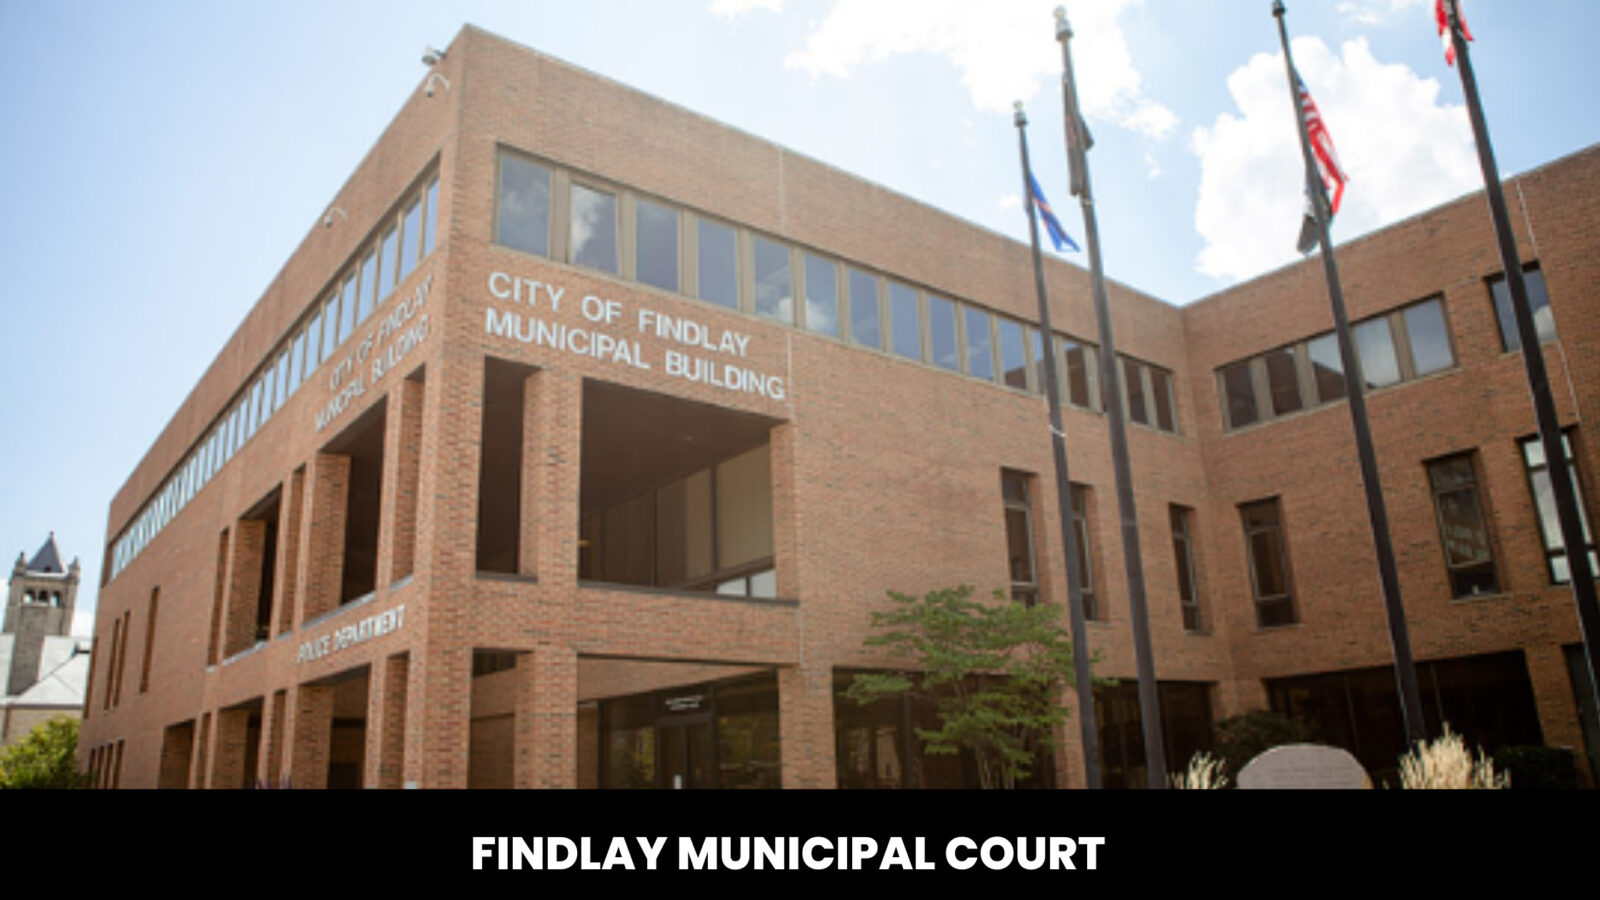 Findlay Municipal Court